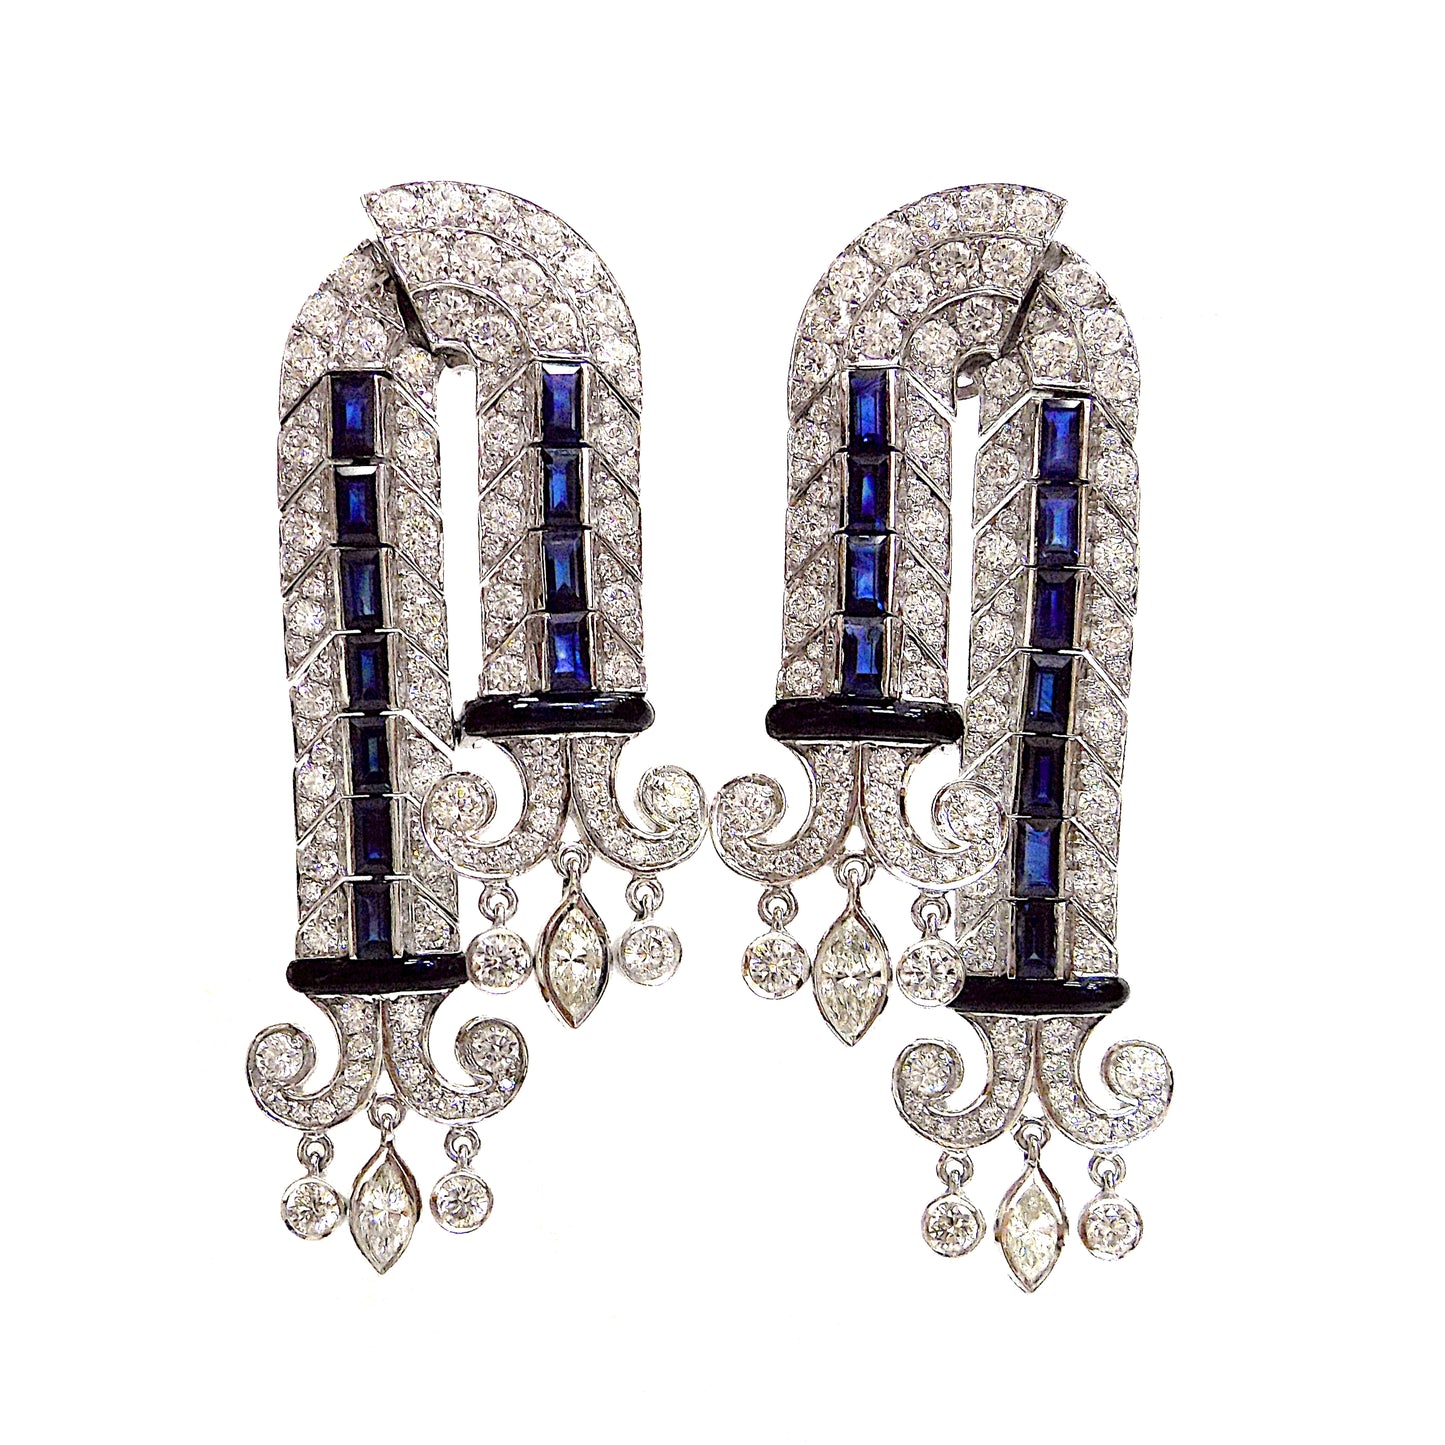 Pair of Sapphire, Diamond and Enamel Earrings